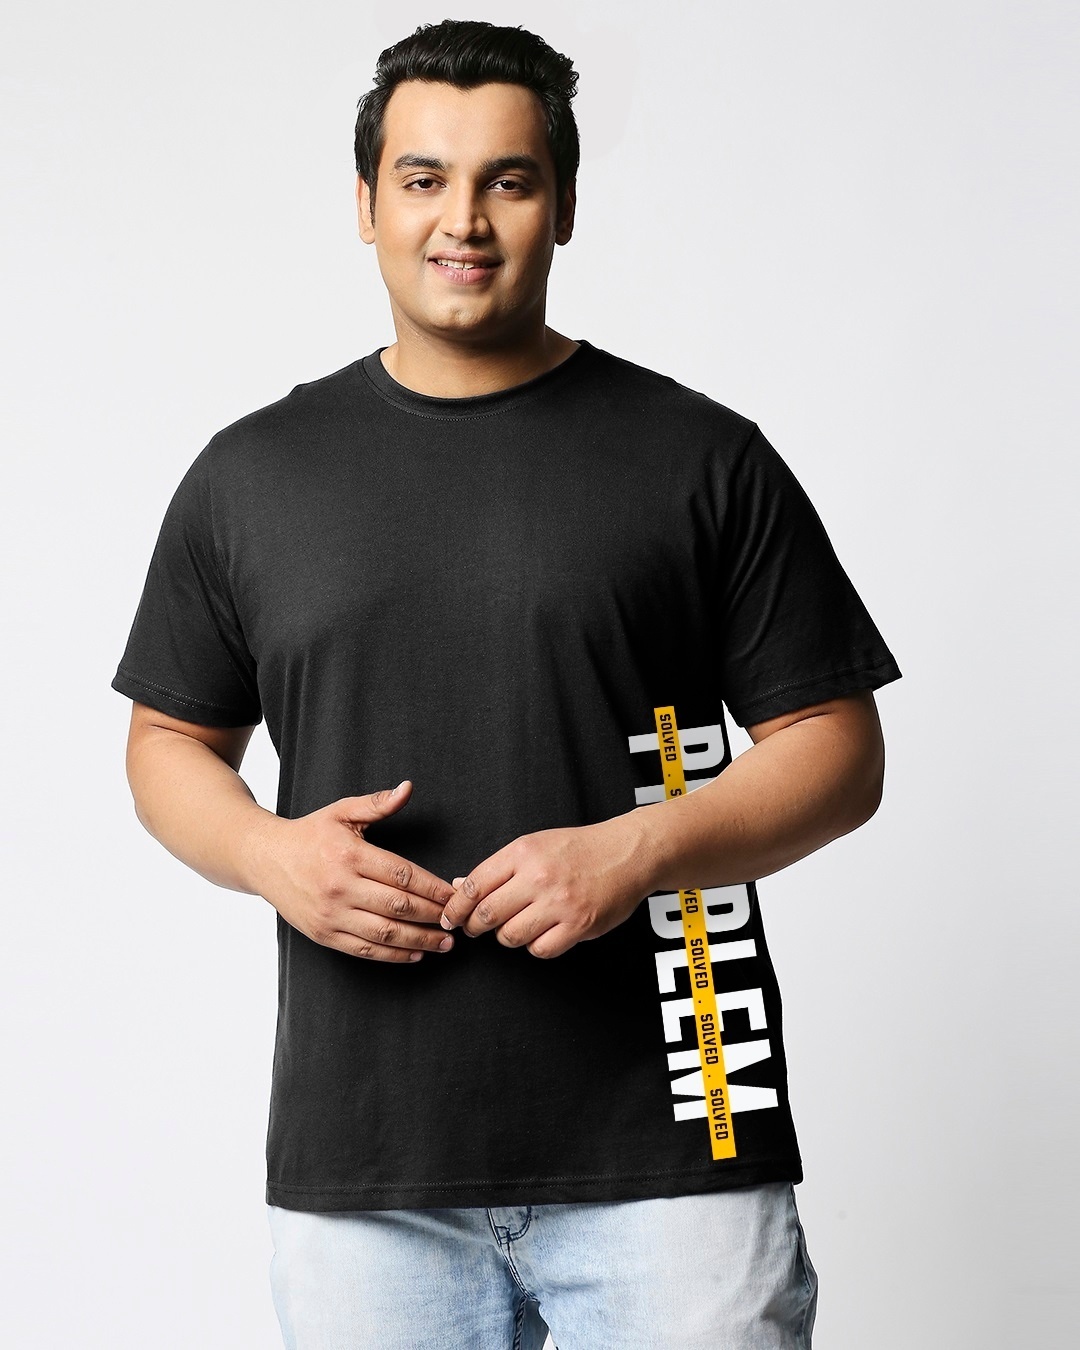 Buy Plus Size Clothing for Men - XXXL TShirts Online at Bewakoof